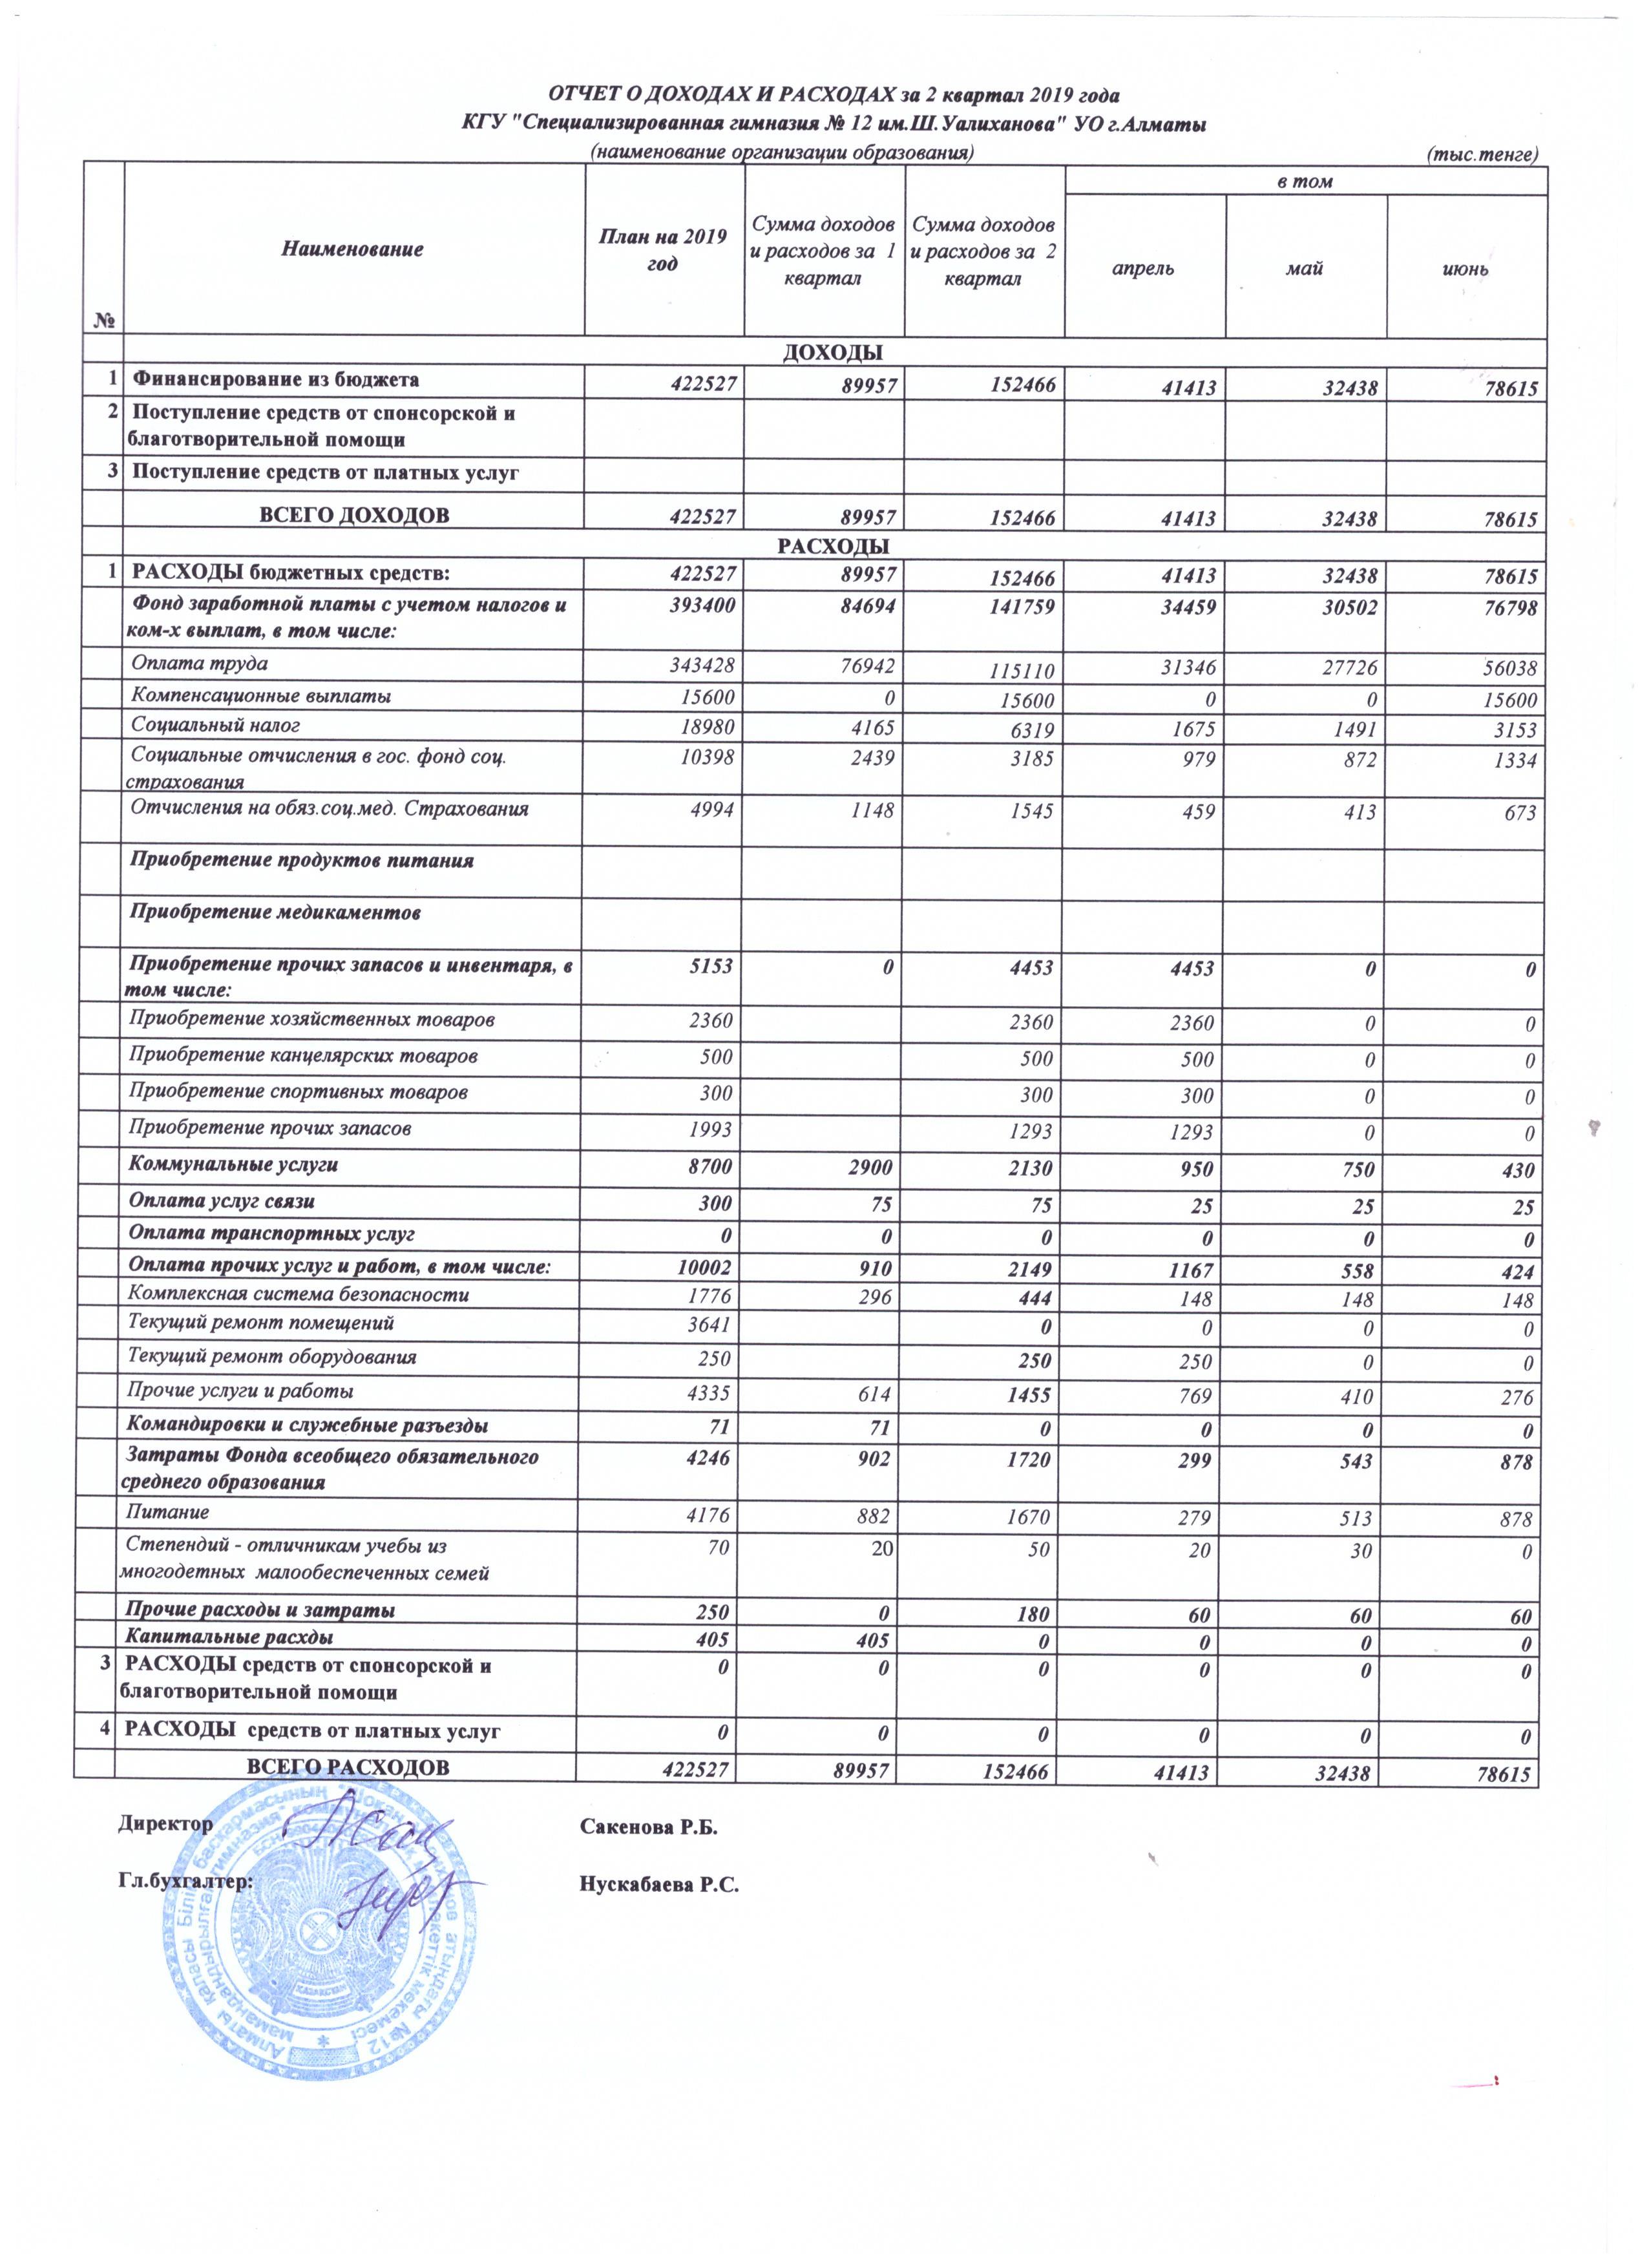 Отчёт о доходах и расходах за 2 кв 2019 г